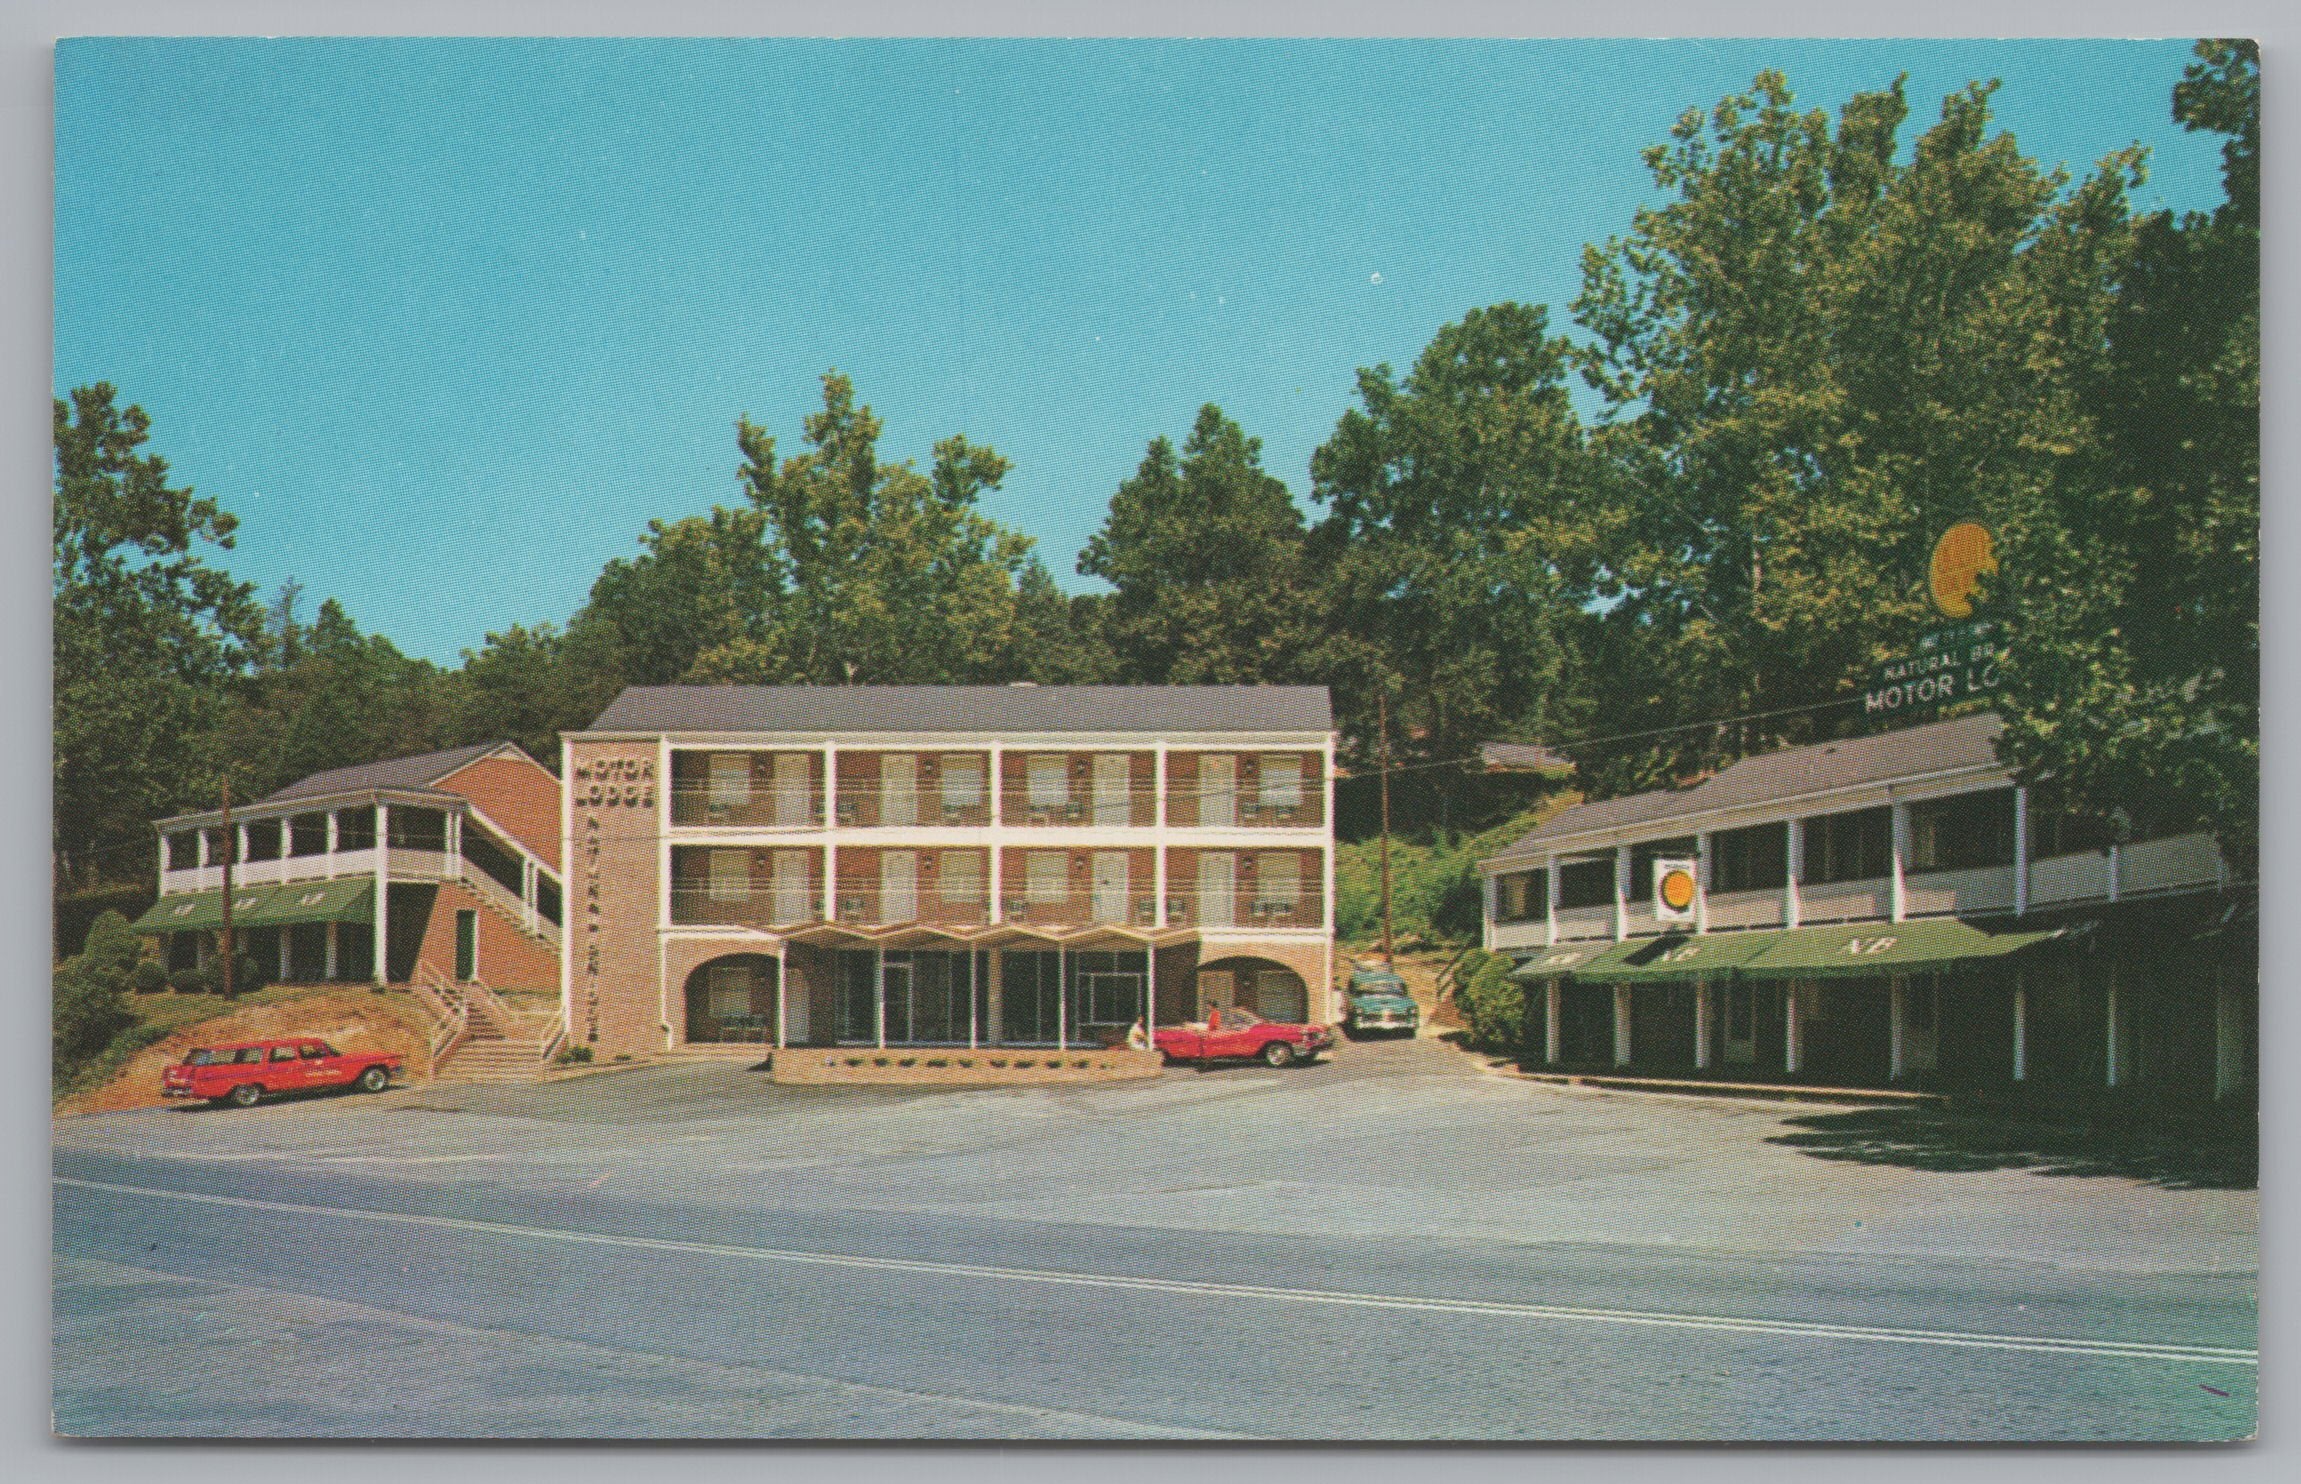 Motor Lodge Office Building, Natural Bridge, Virginia, Vintage Post Card.